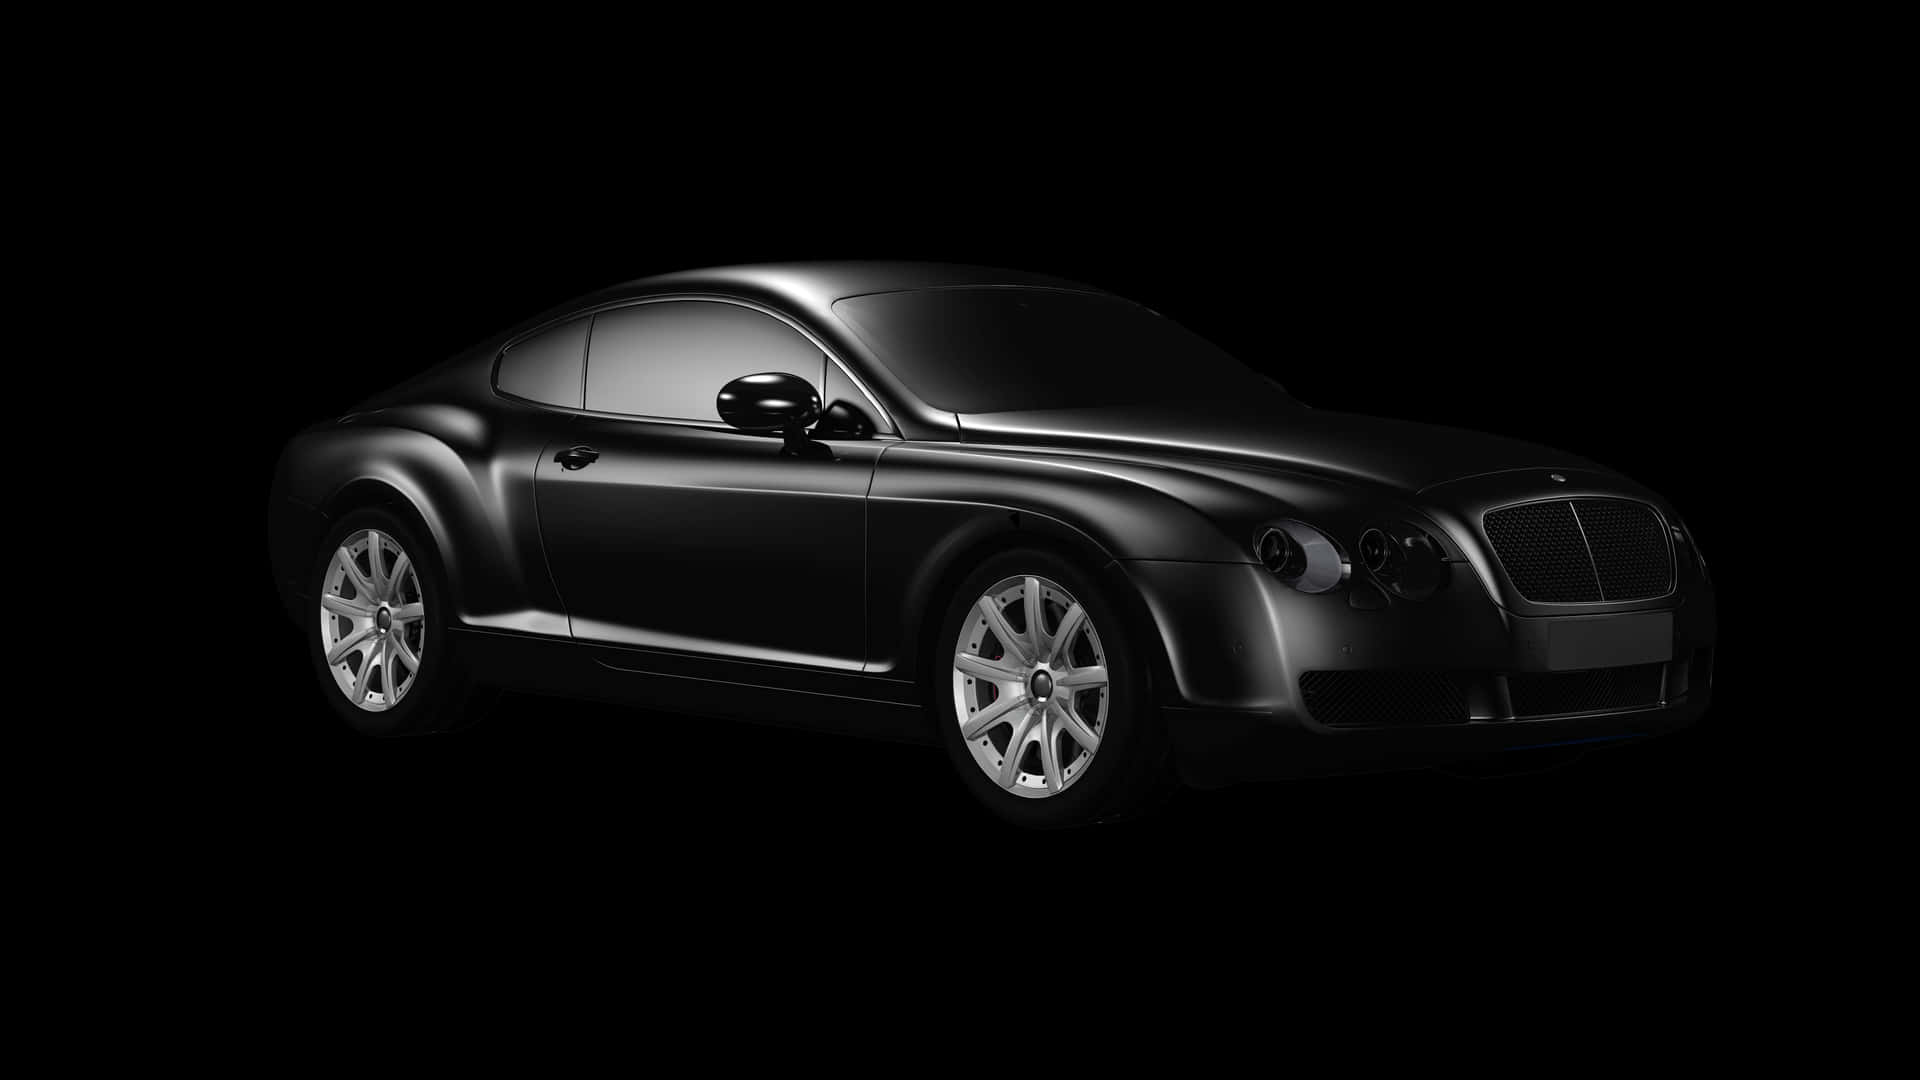 Sleek_ Black_ Luxury_ Car_ Profile_ View Wallpaper